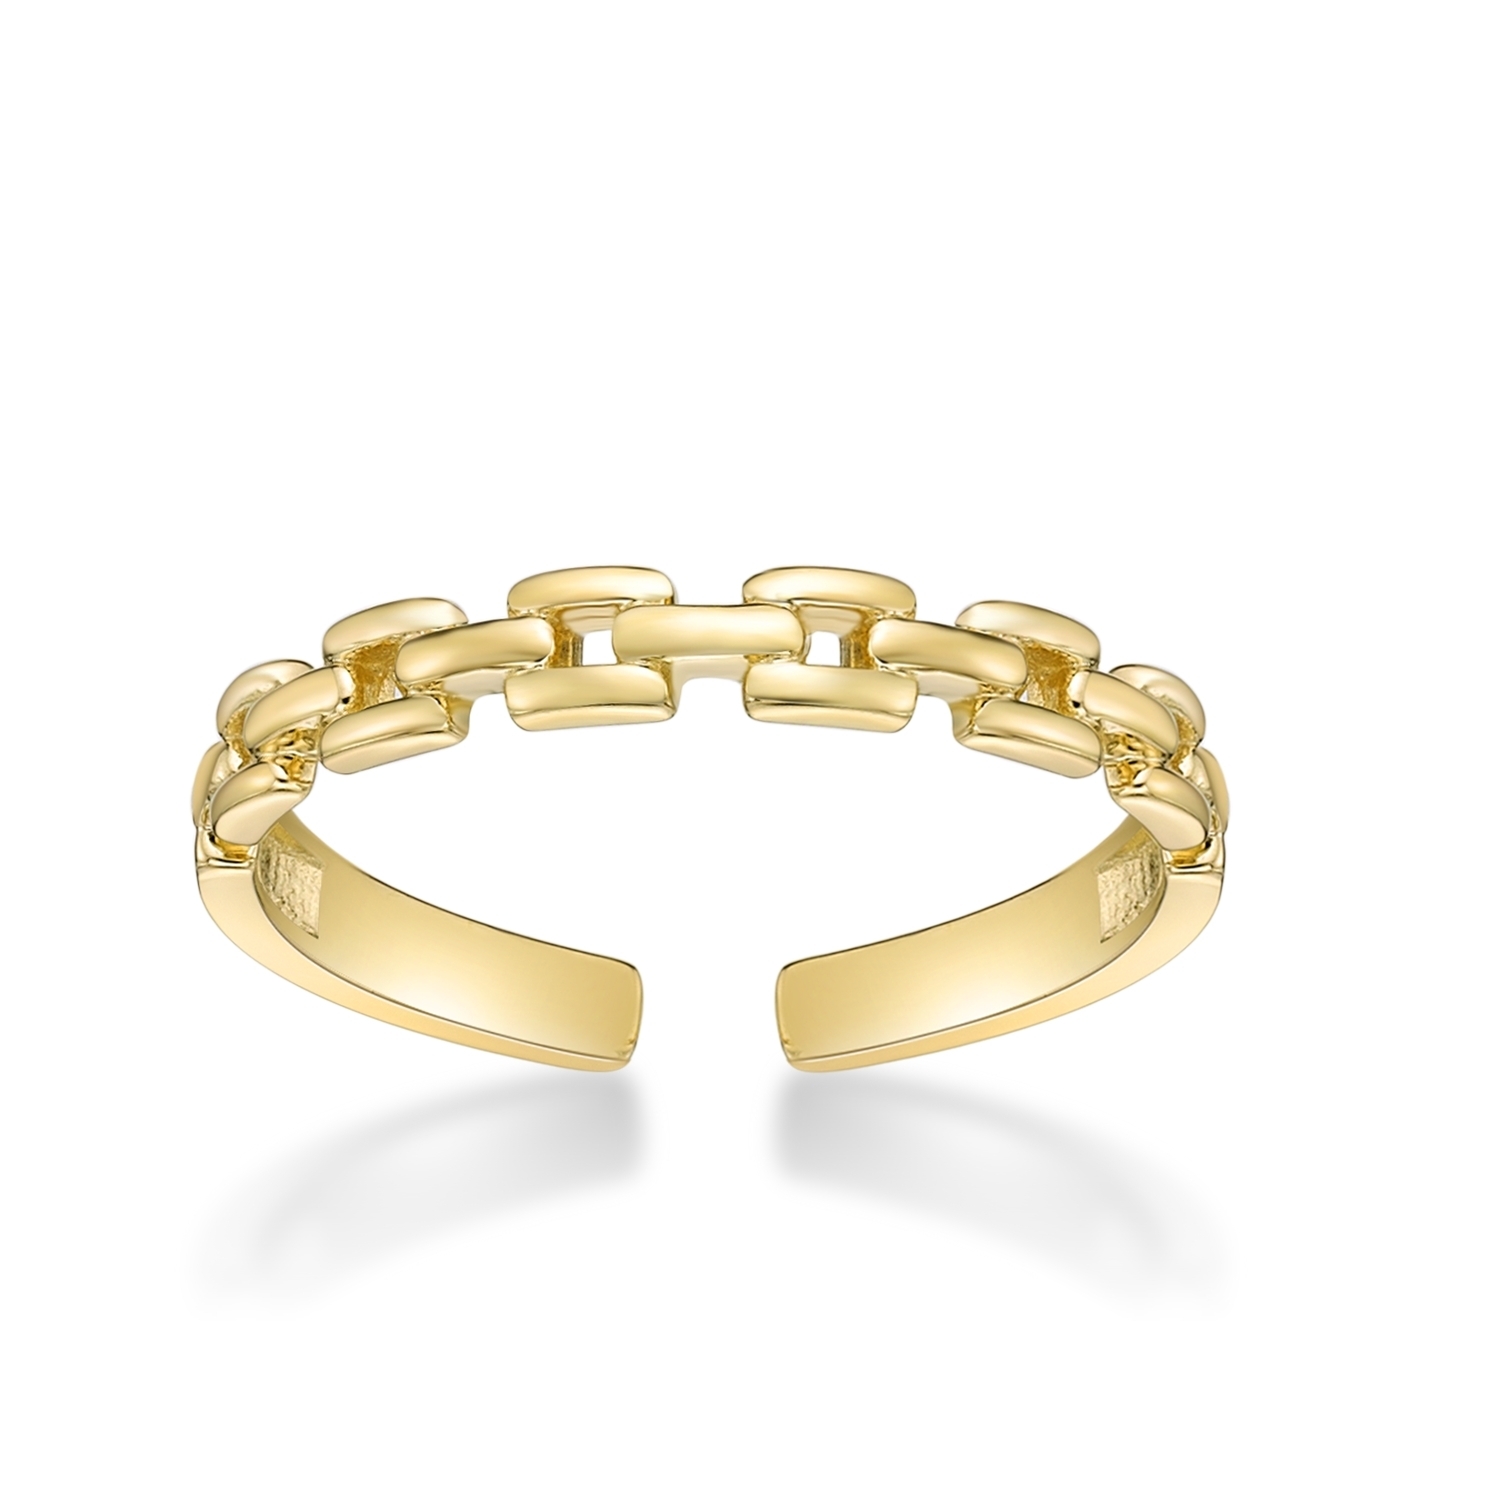 Lavari Jewelers Women's Link Design Adjustable Toe Ring, 10K 